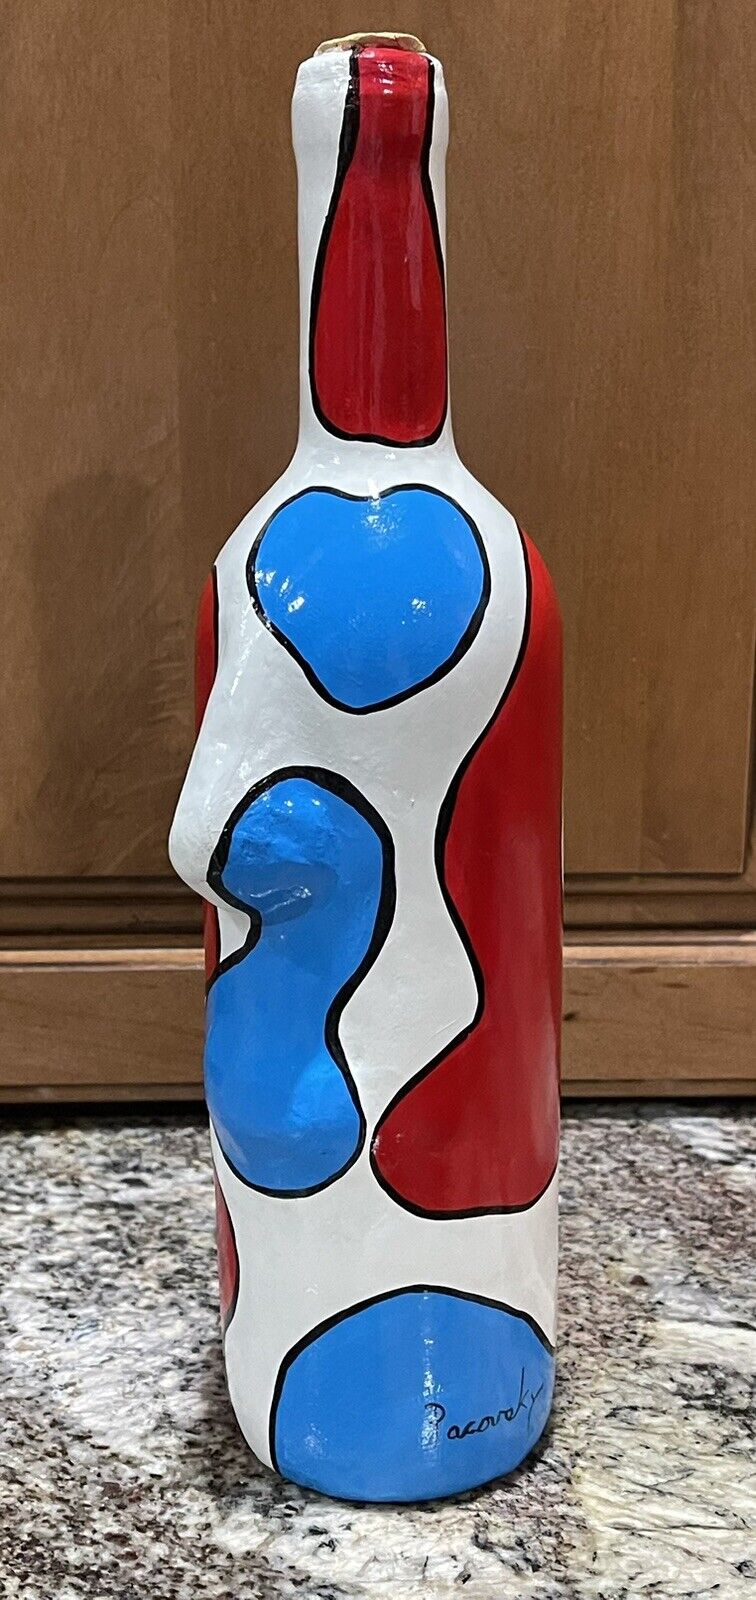 John Pacovsky OOAK Hand Painted Absolut Vodka Face Sculpture Painting Bottle Art